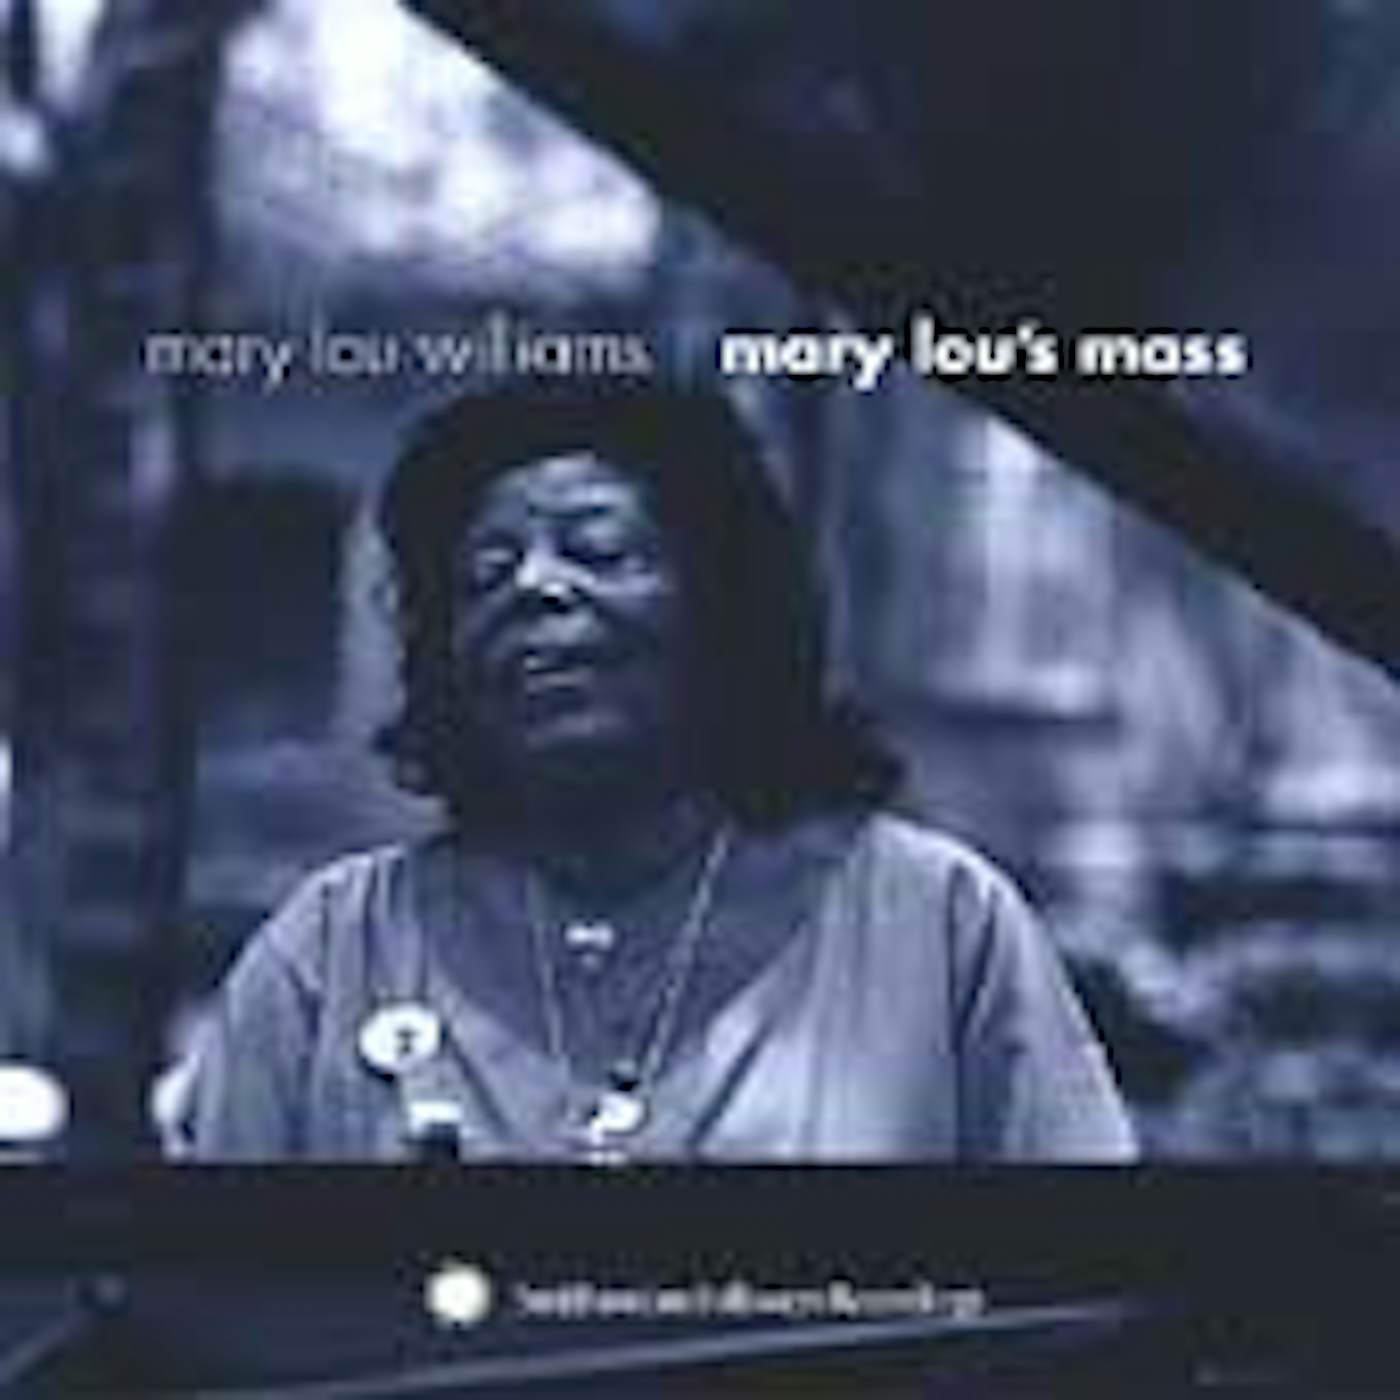 Mary Lou Williams MARY LOUS MASS CD